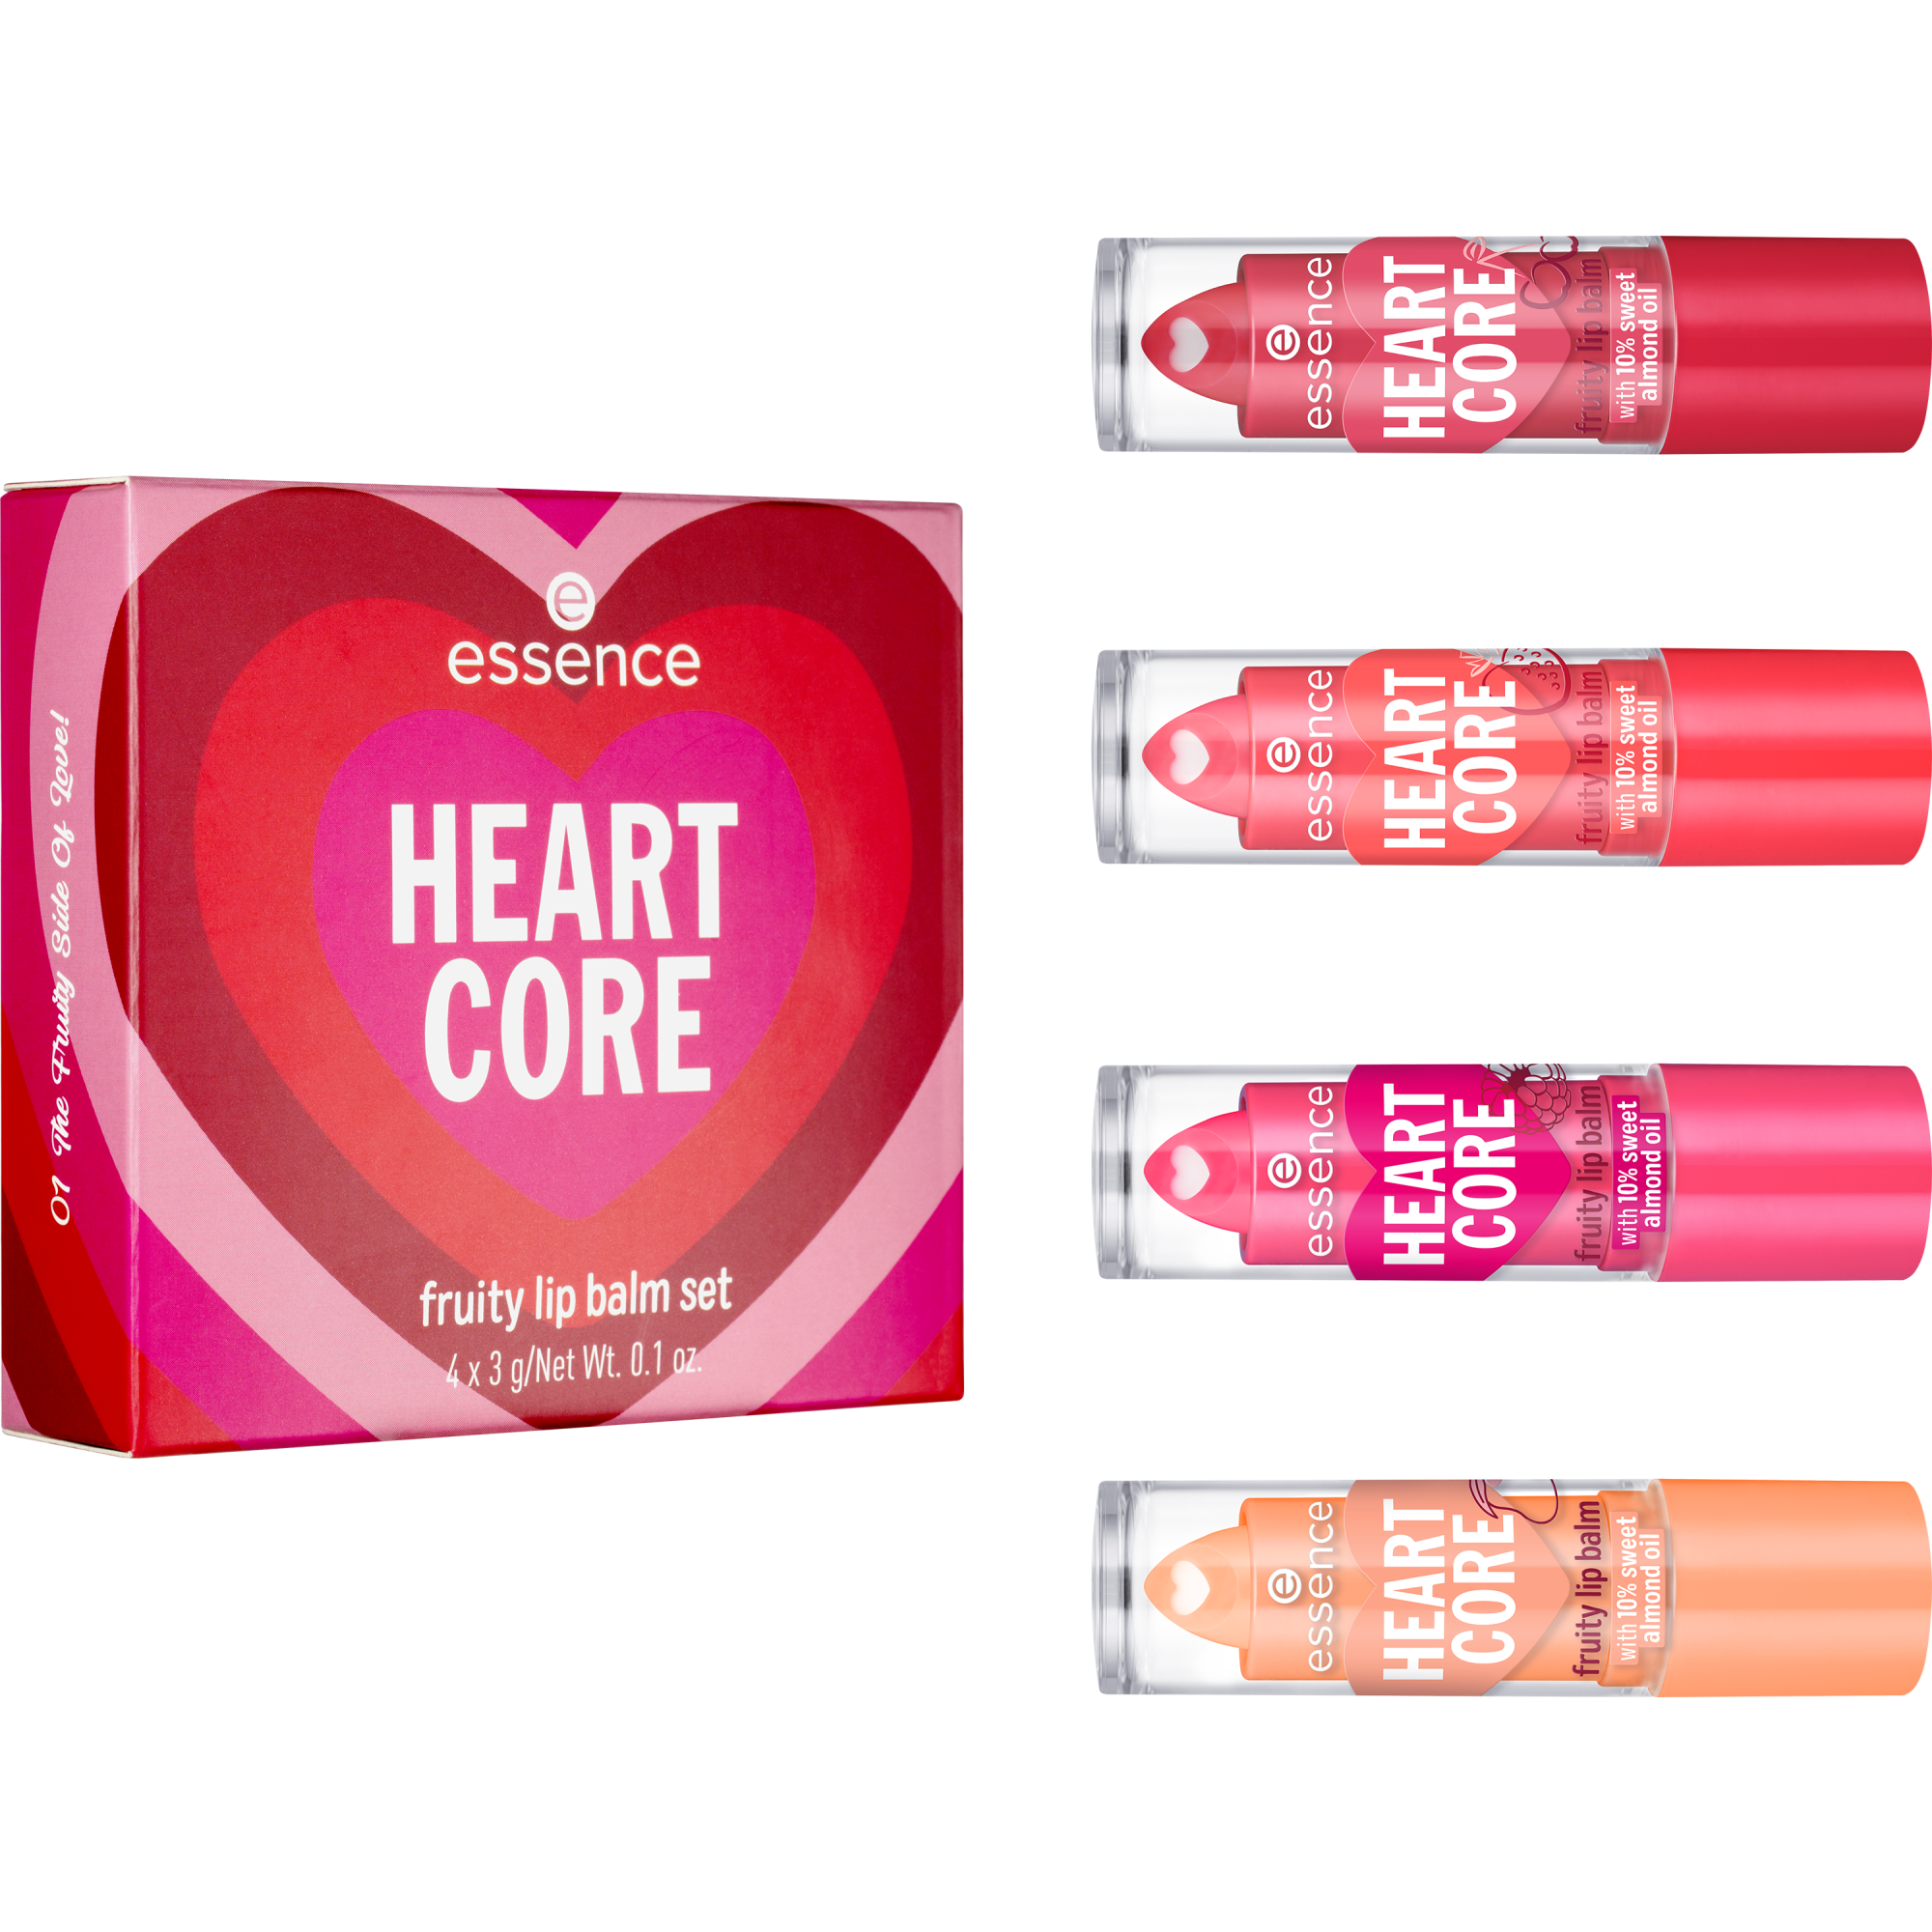 HEART CORE fruity lip balm set 01